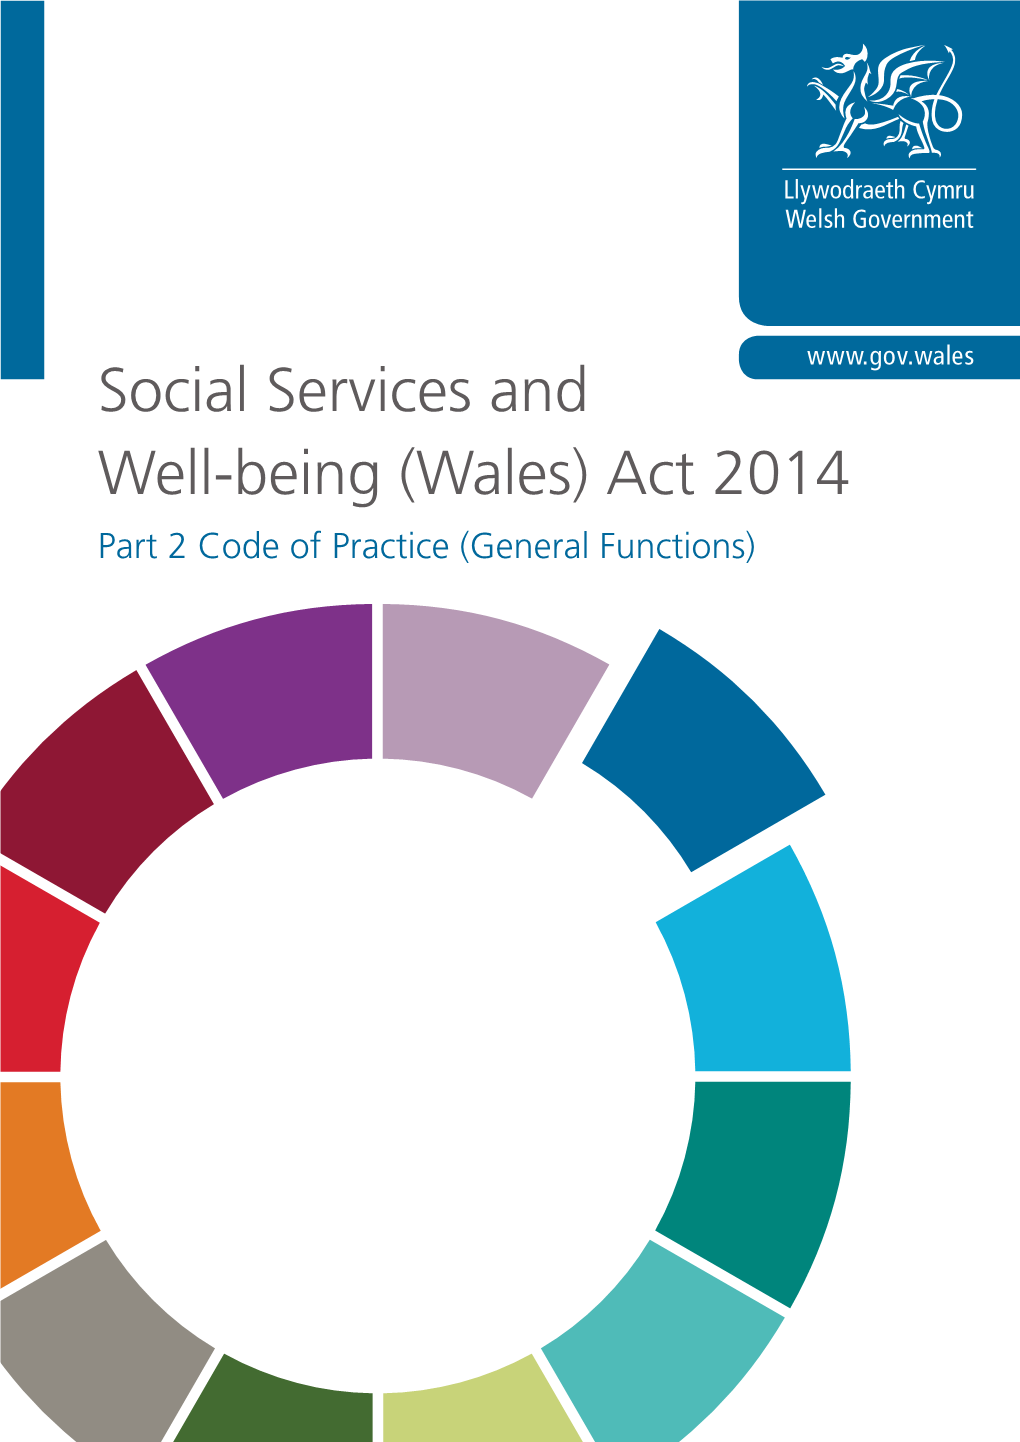 Act 2014 Part 2 Code of Practice (General Functions) Part 2 Code of Practice (General Functions) Part 2